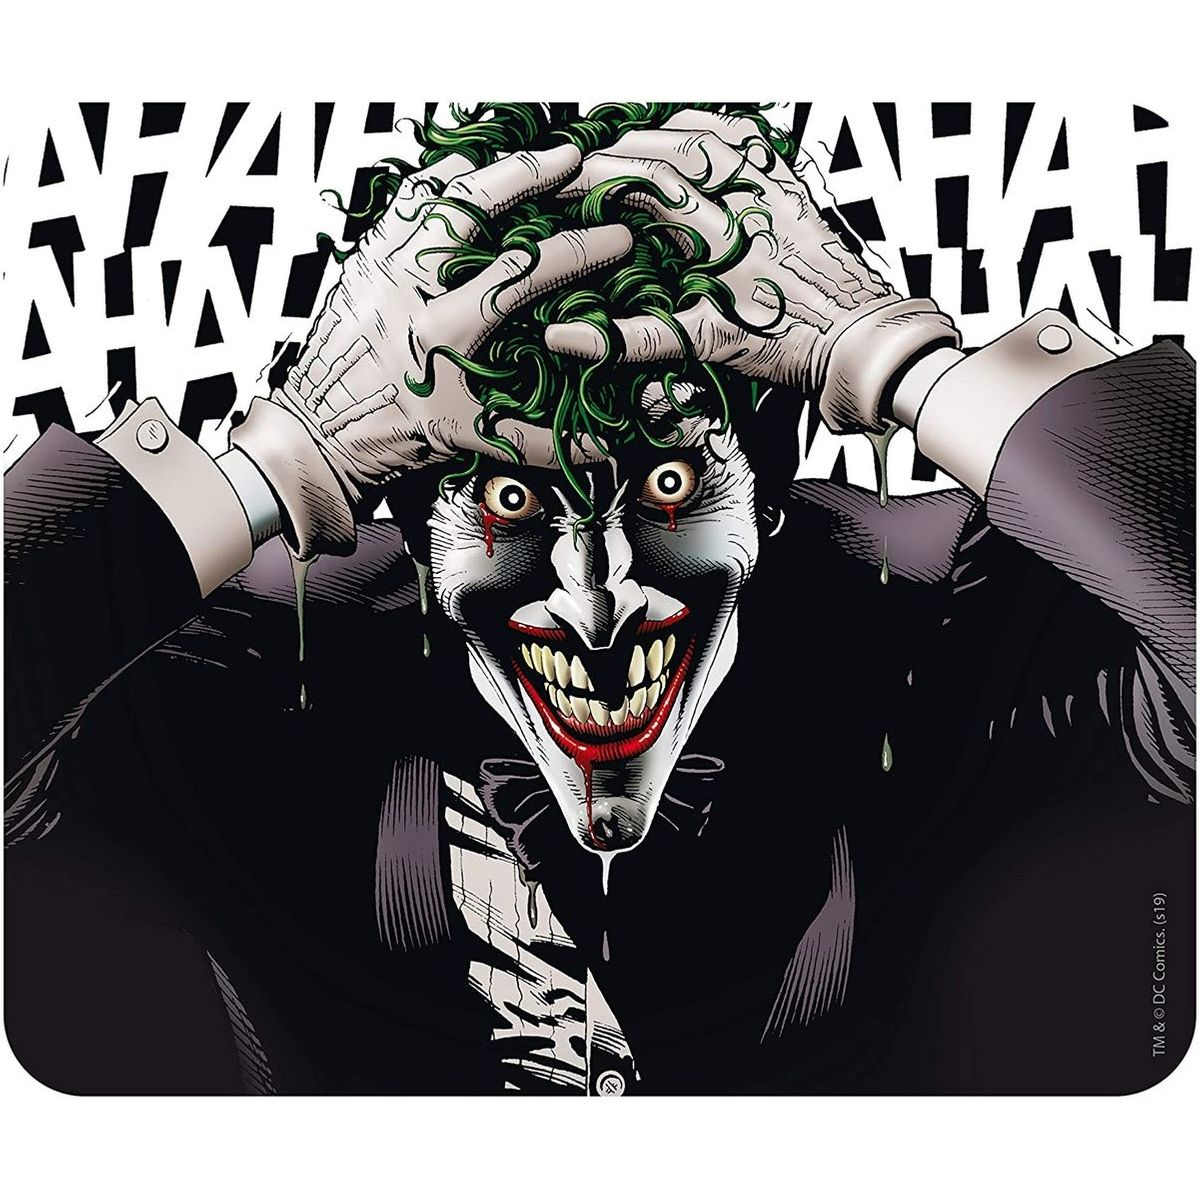 ABYSTYLE Joker Gesicht Gaming mm 0 mm) (0 Mauspad x